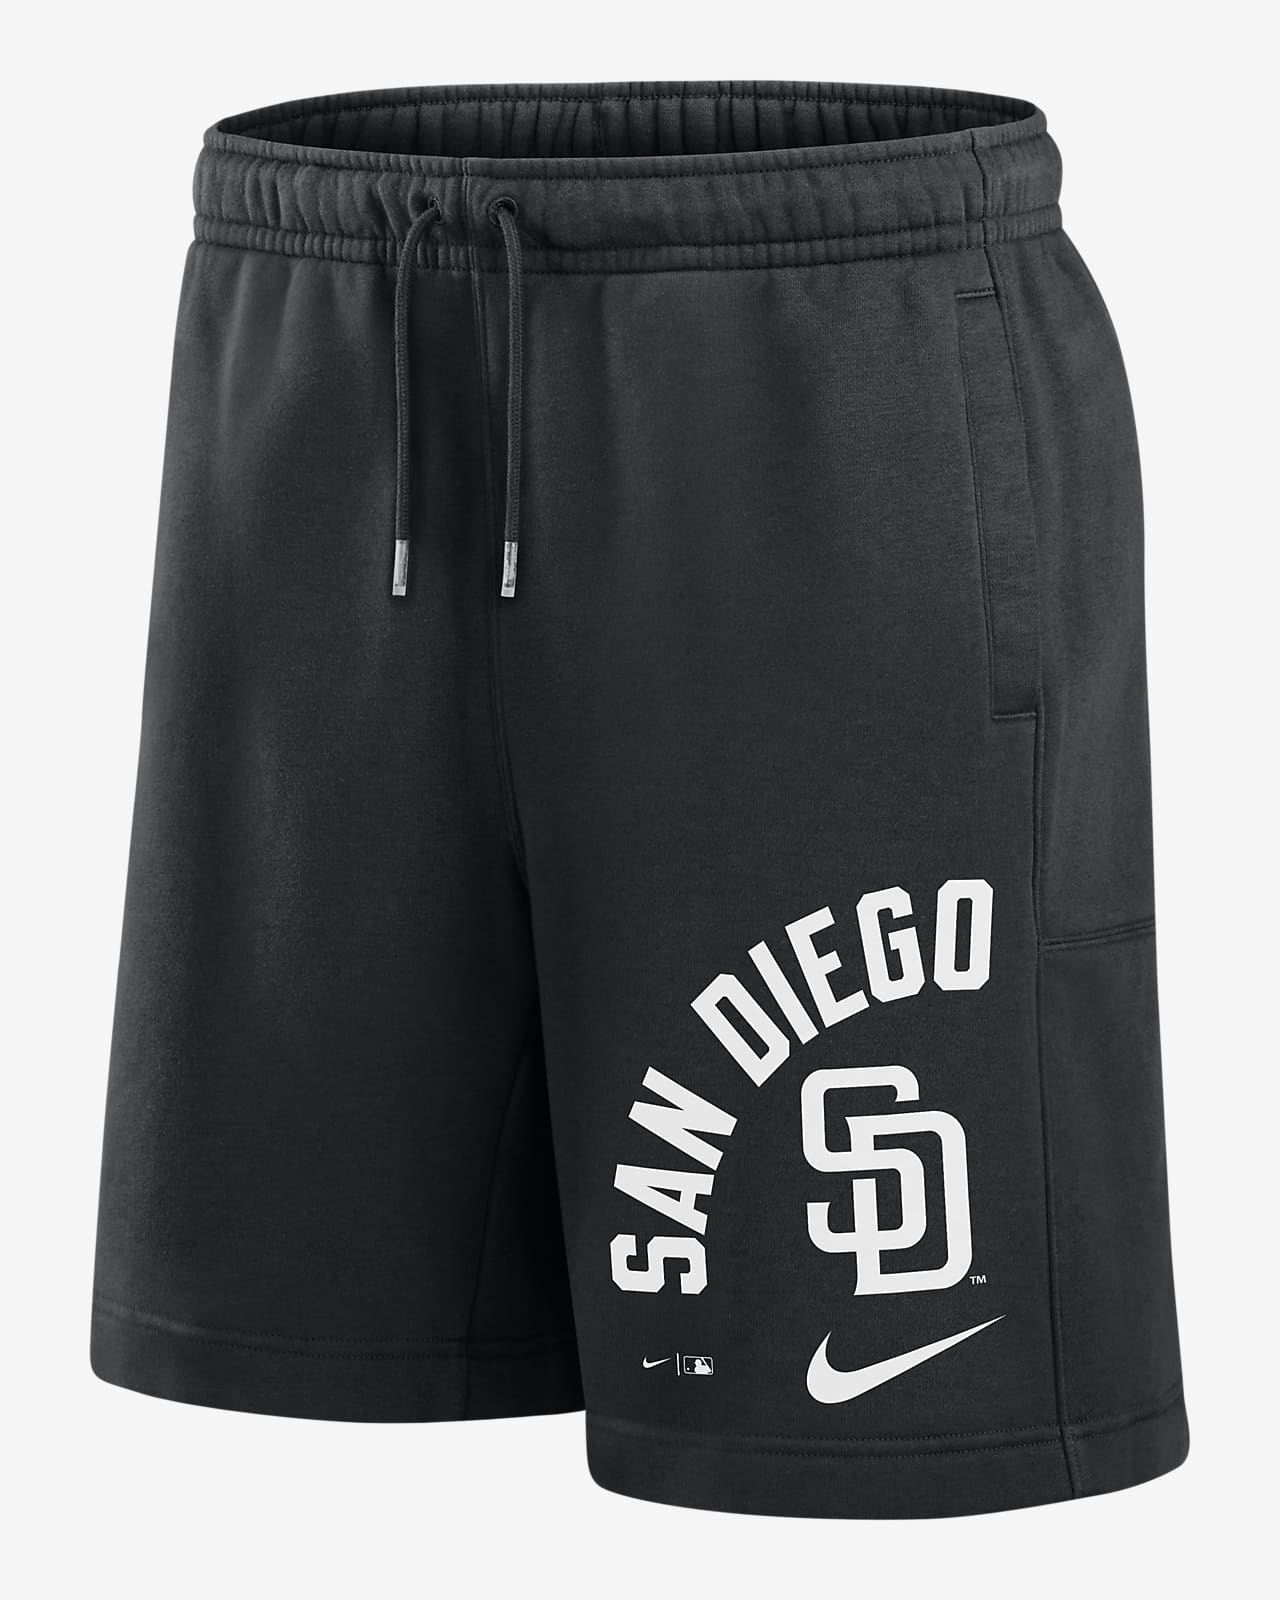 San Diego Padres Arched Kicker Men's Nike MLB Shorts